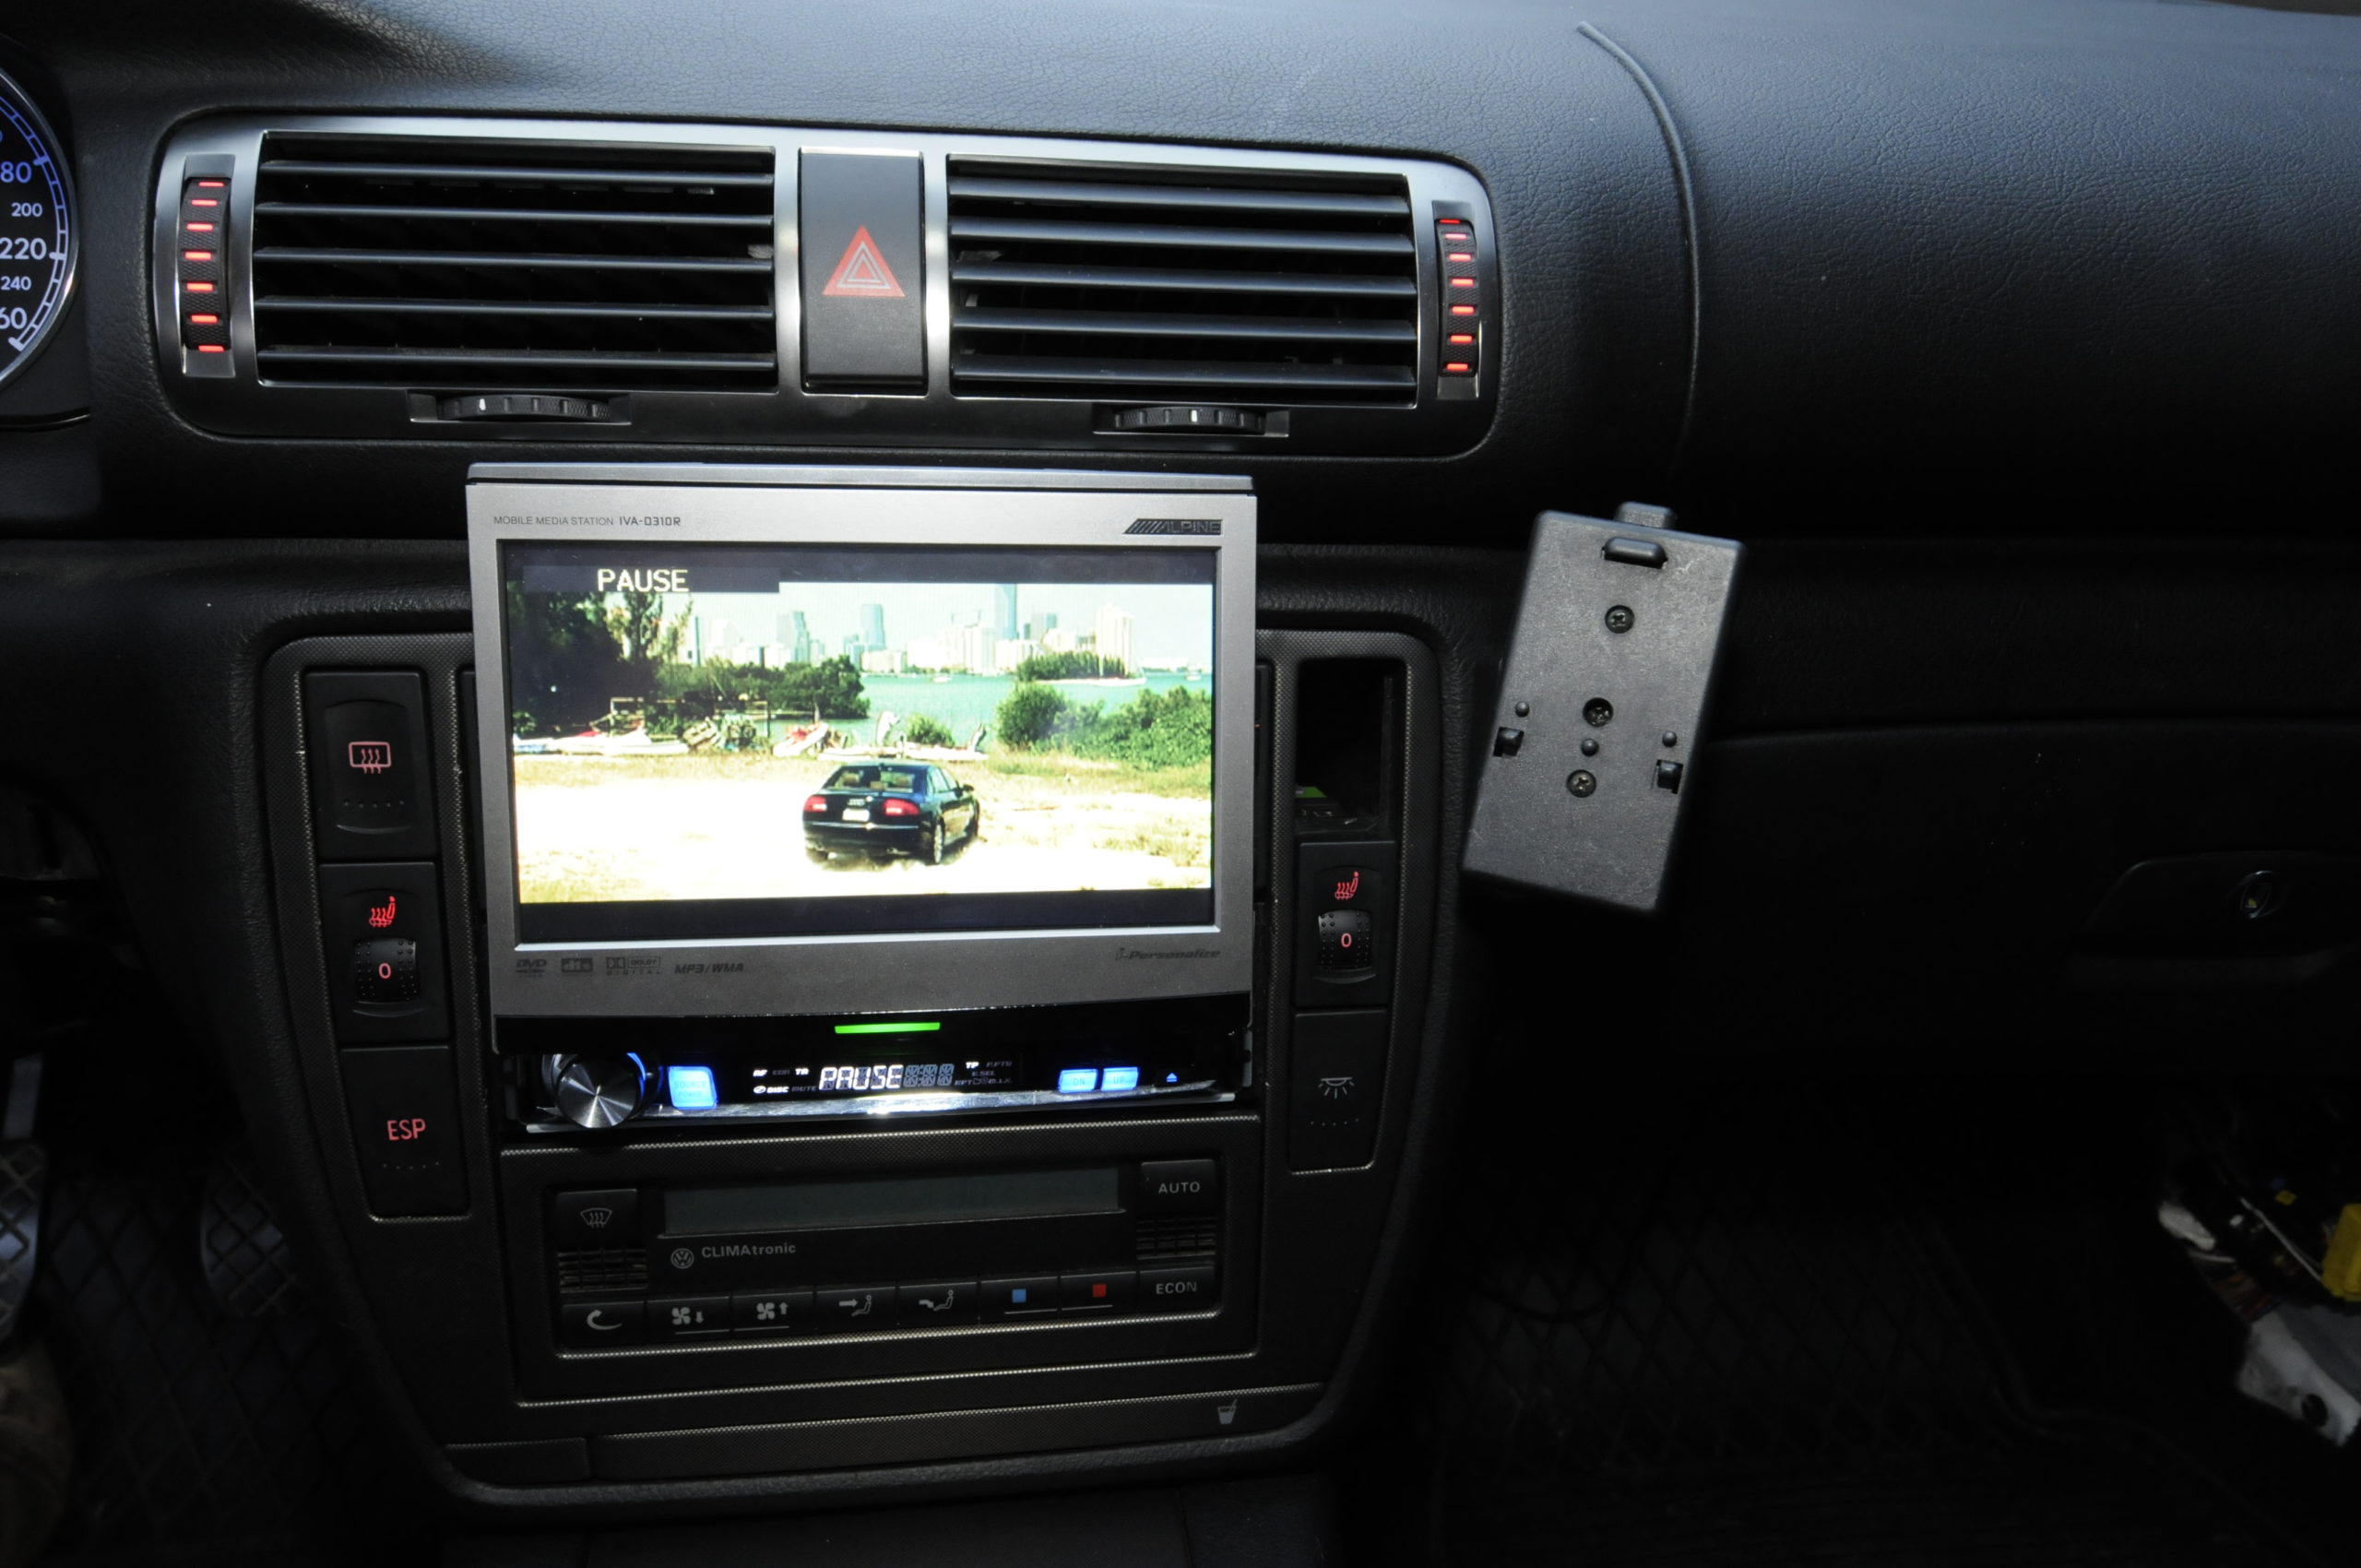 VW Passat B5 LF system audio video